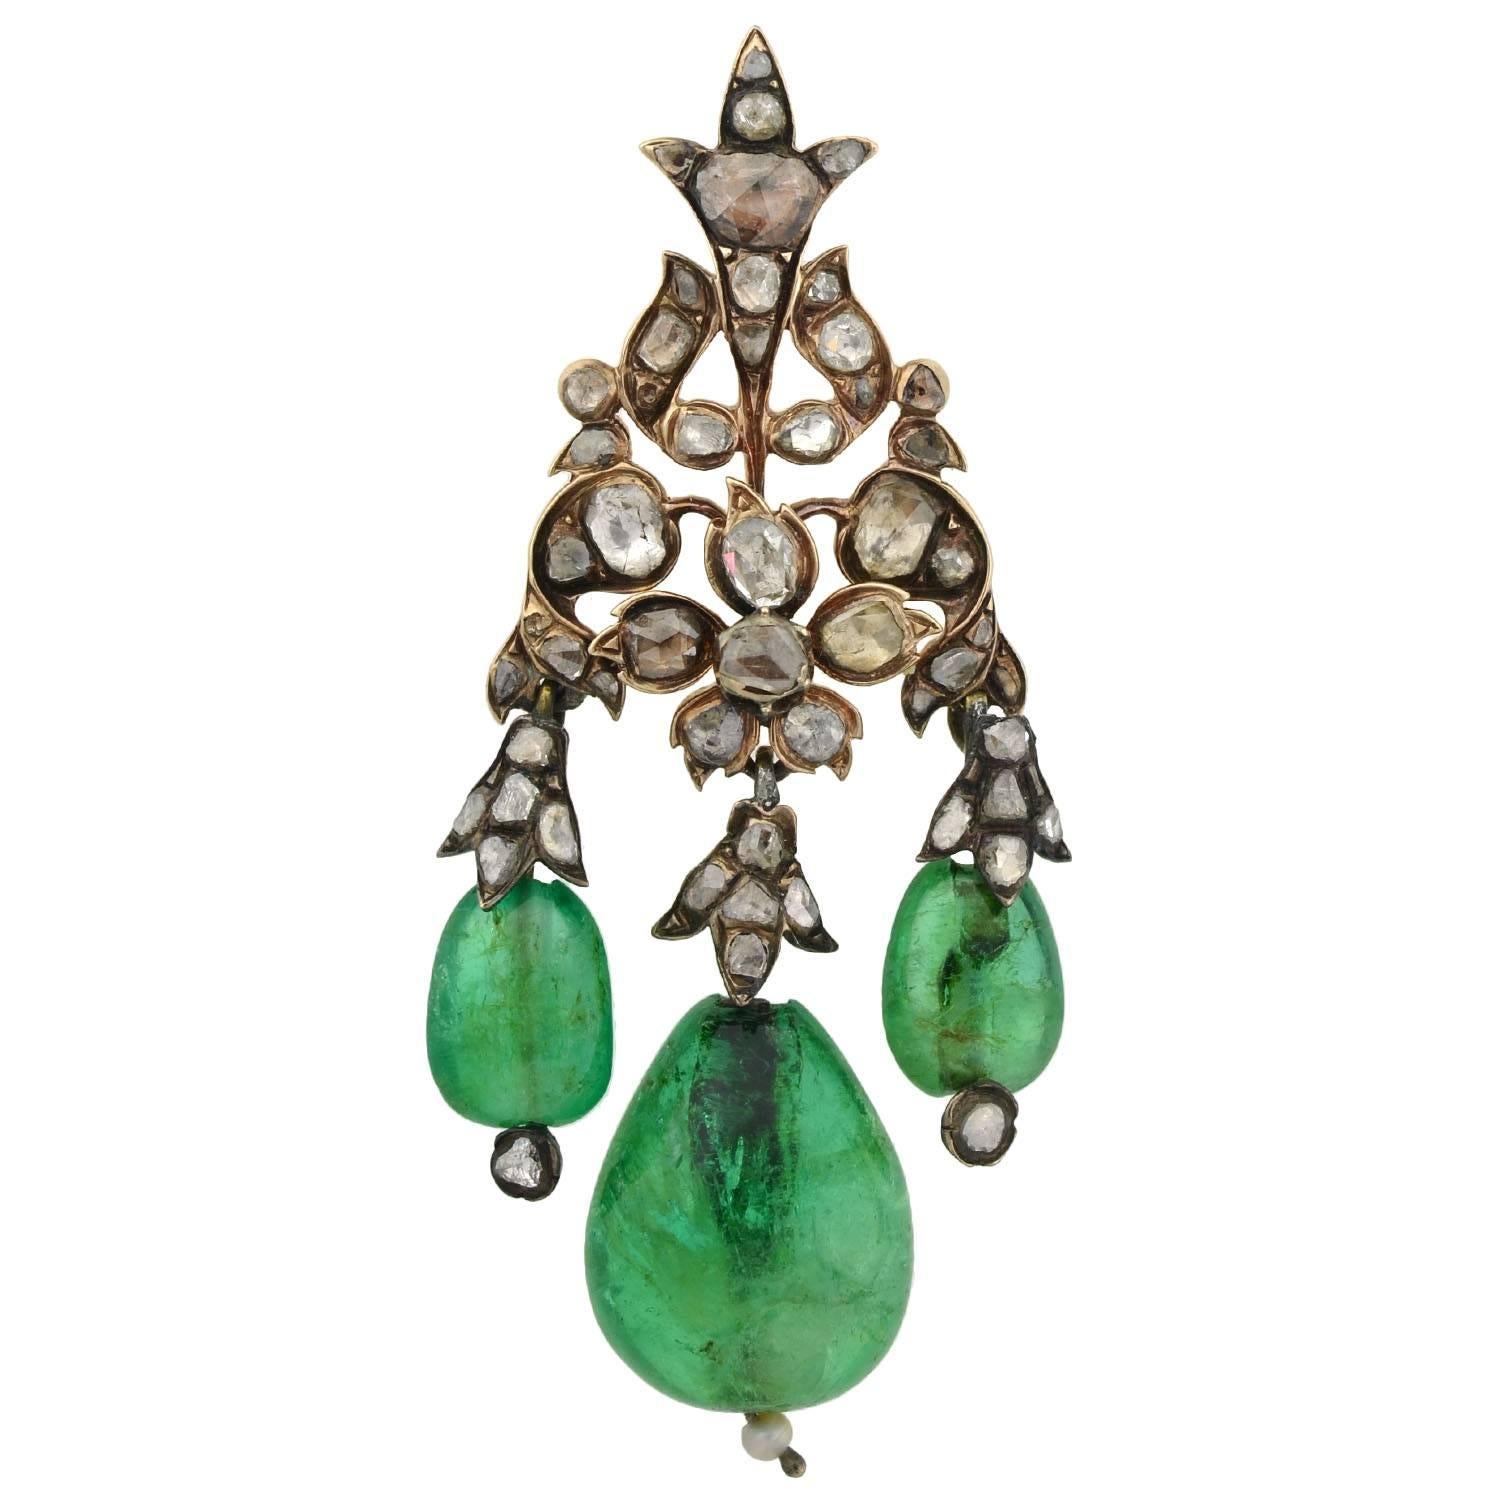 Exceptional Early Victorian Emerald, Diamond and Pearl Pendant in Original Box